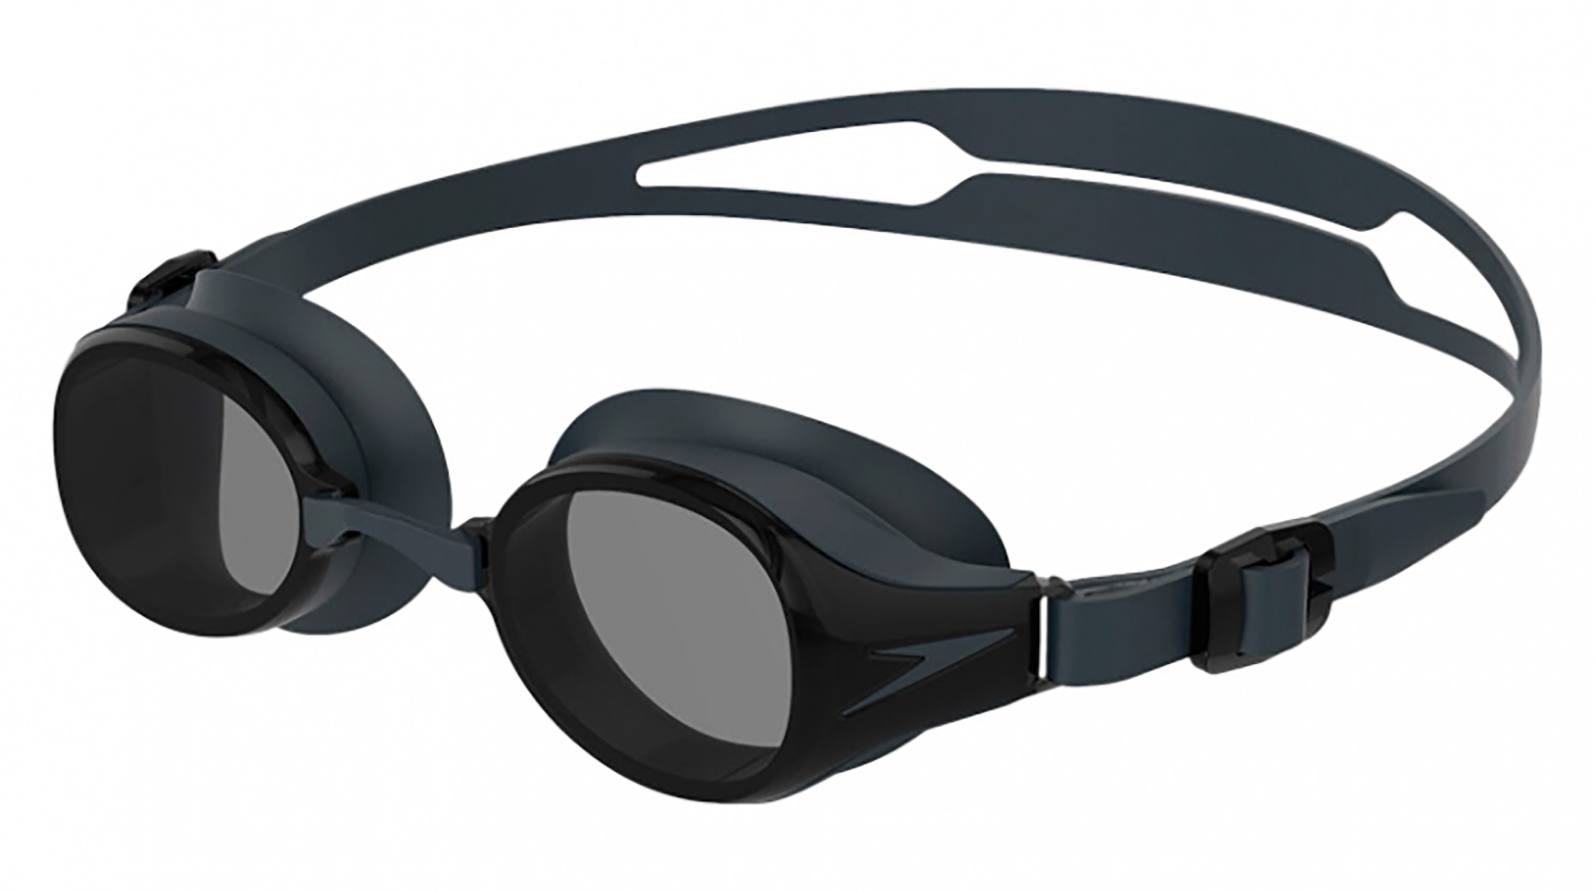 Speedo Очки для плавания Hydropure Optical F808 -2,5 speedo очки для плавания hydropure optical f809 5 0